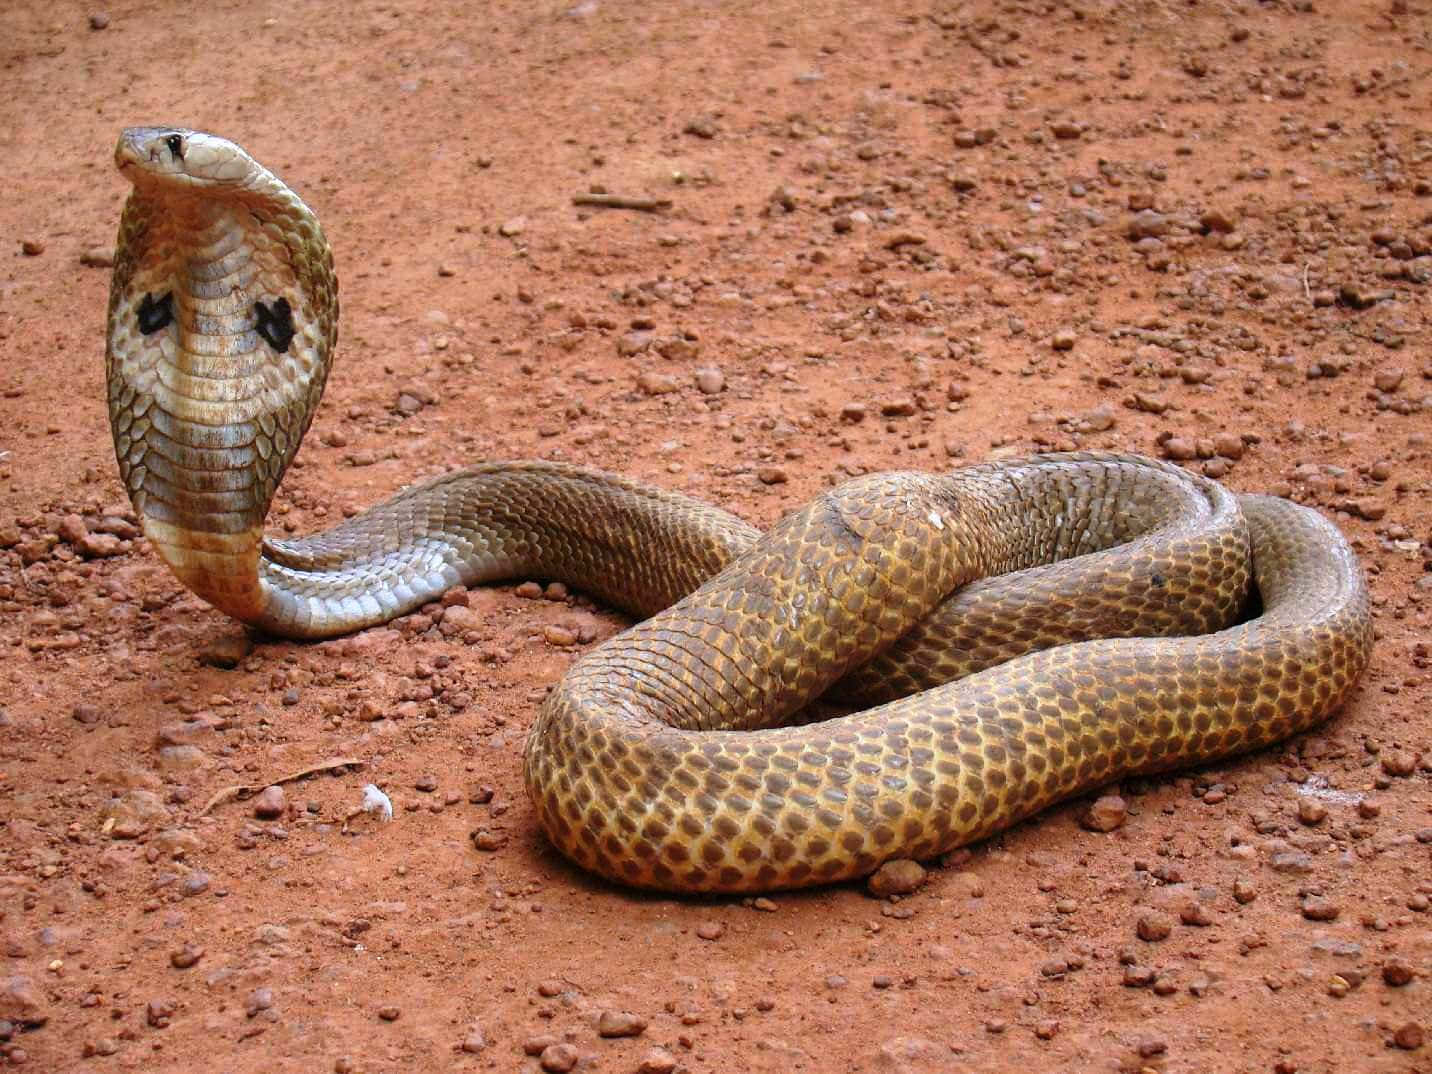 A spectacular cobra snake in its natural habitat